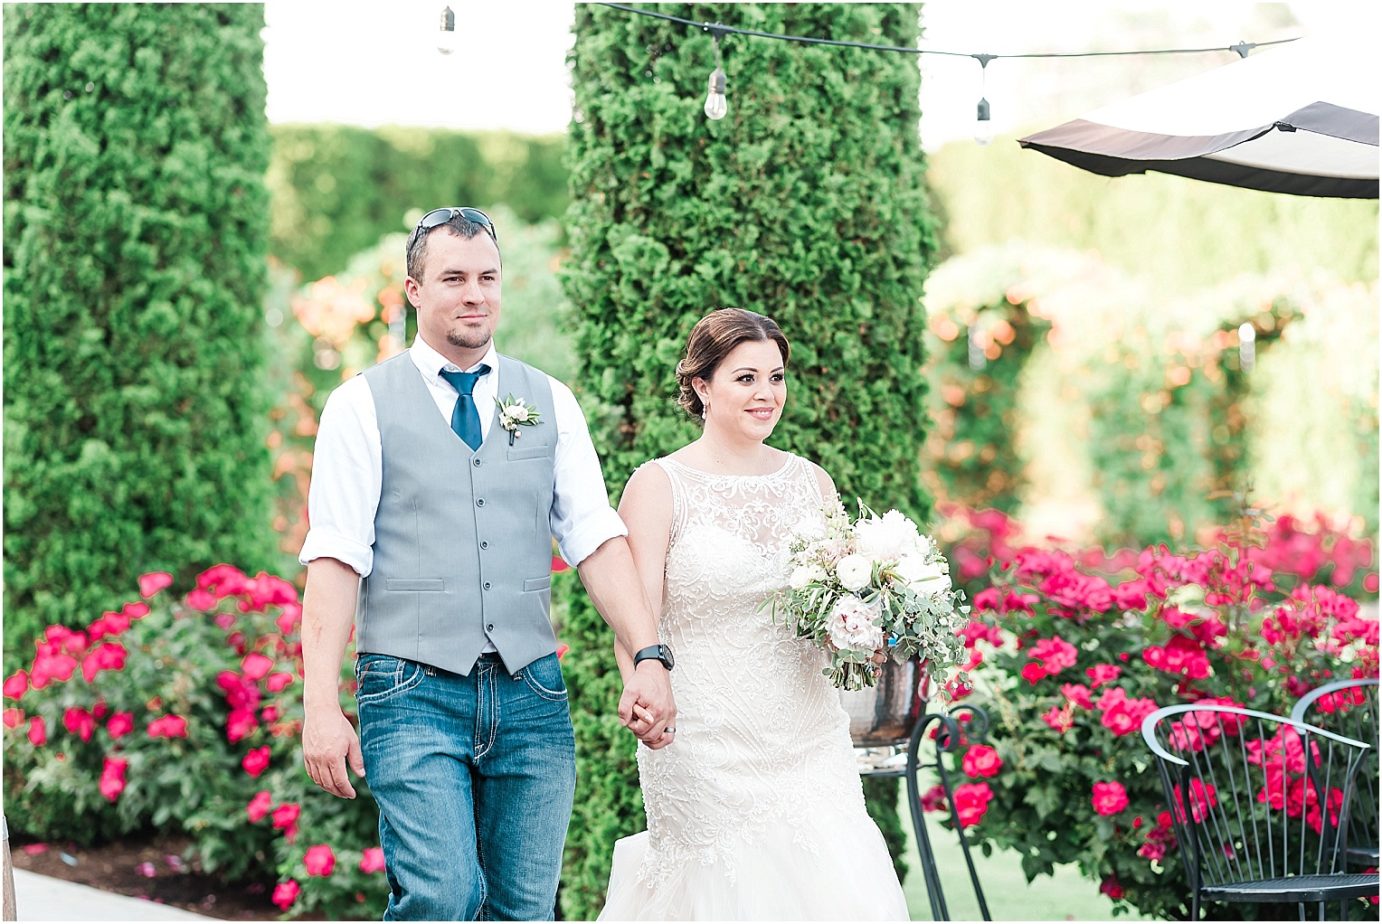 Bella Fiori Gardens wedding bride and groom getting announced